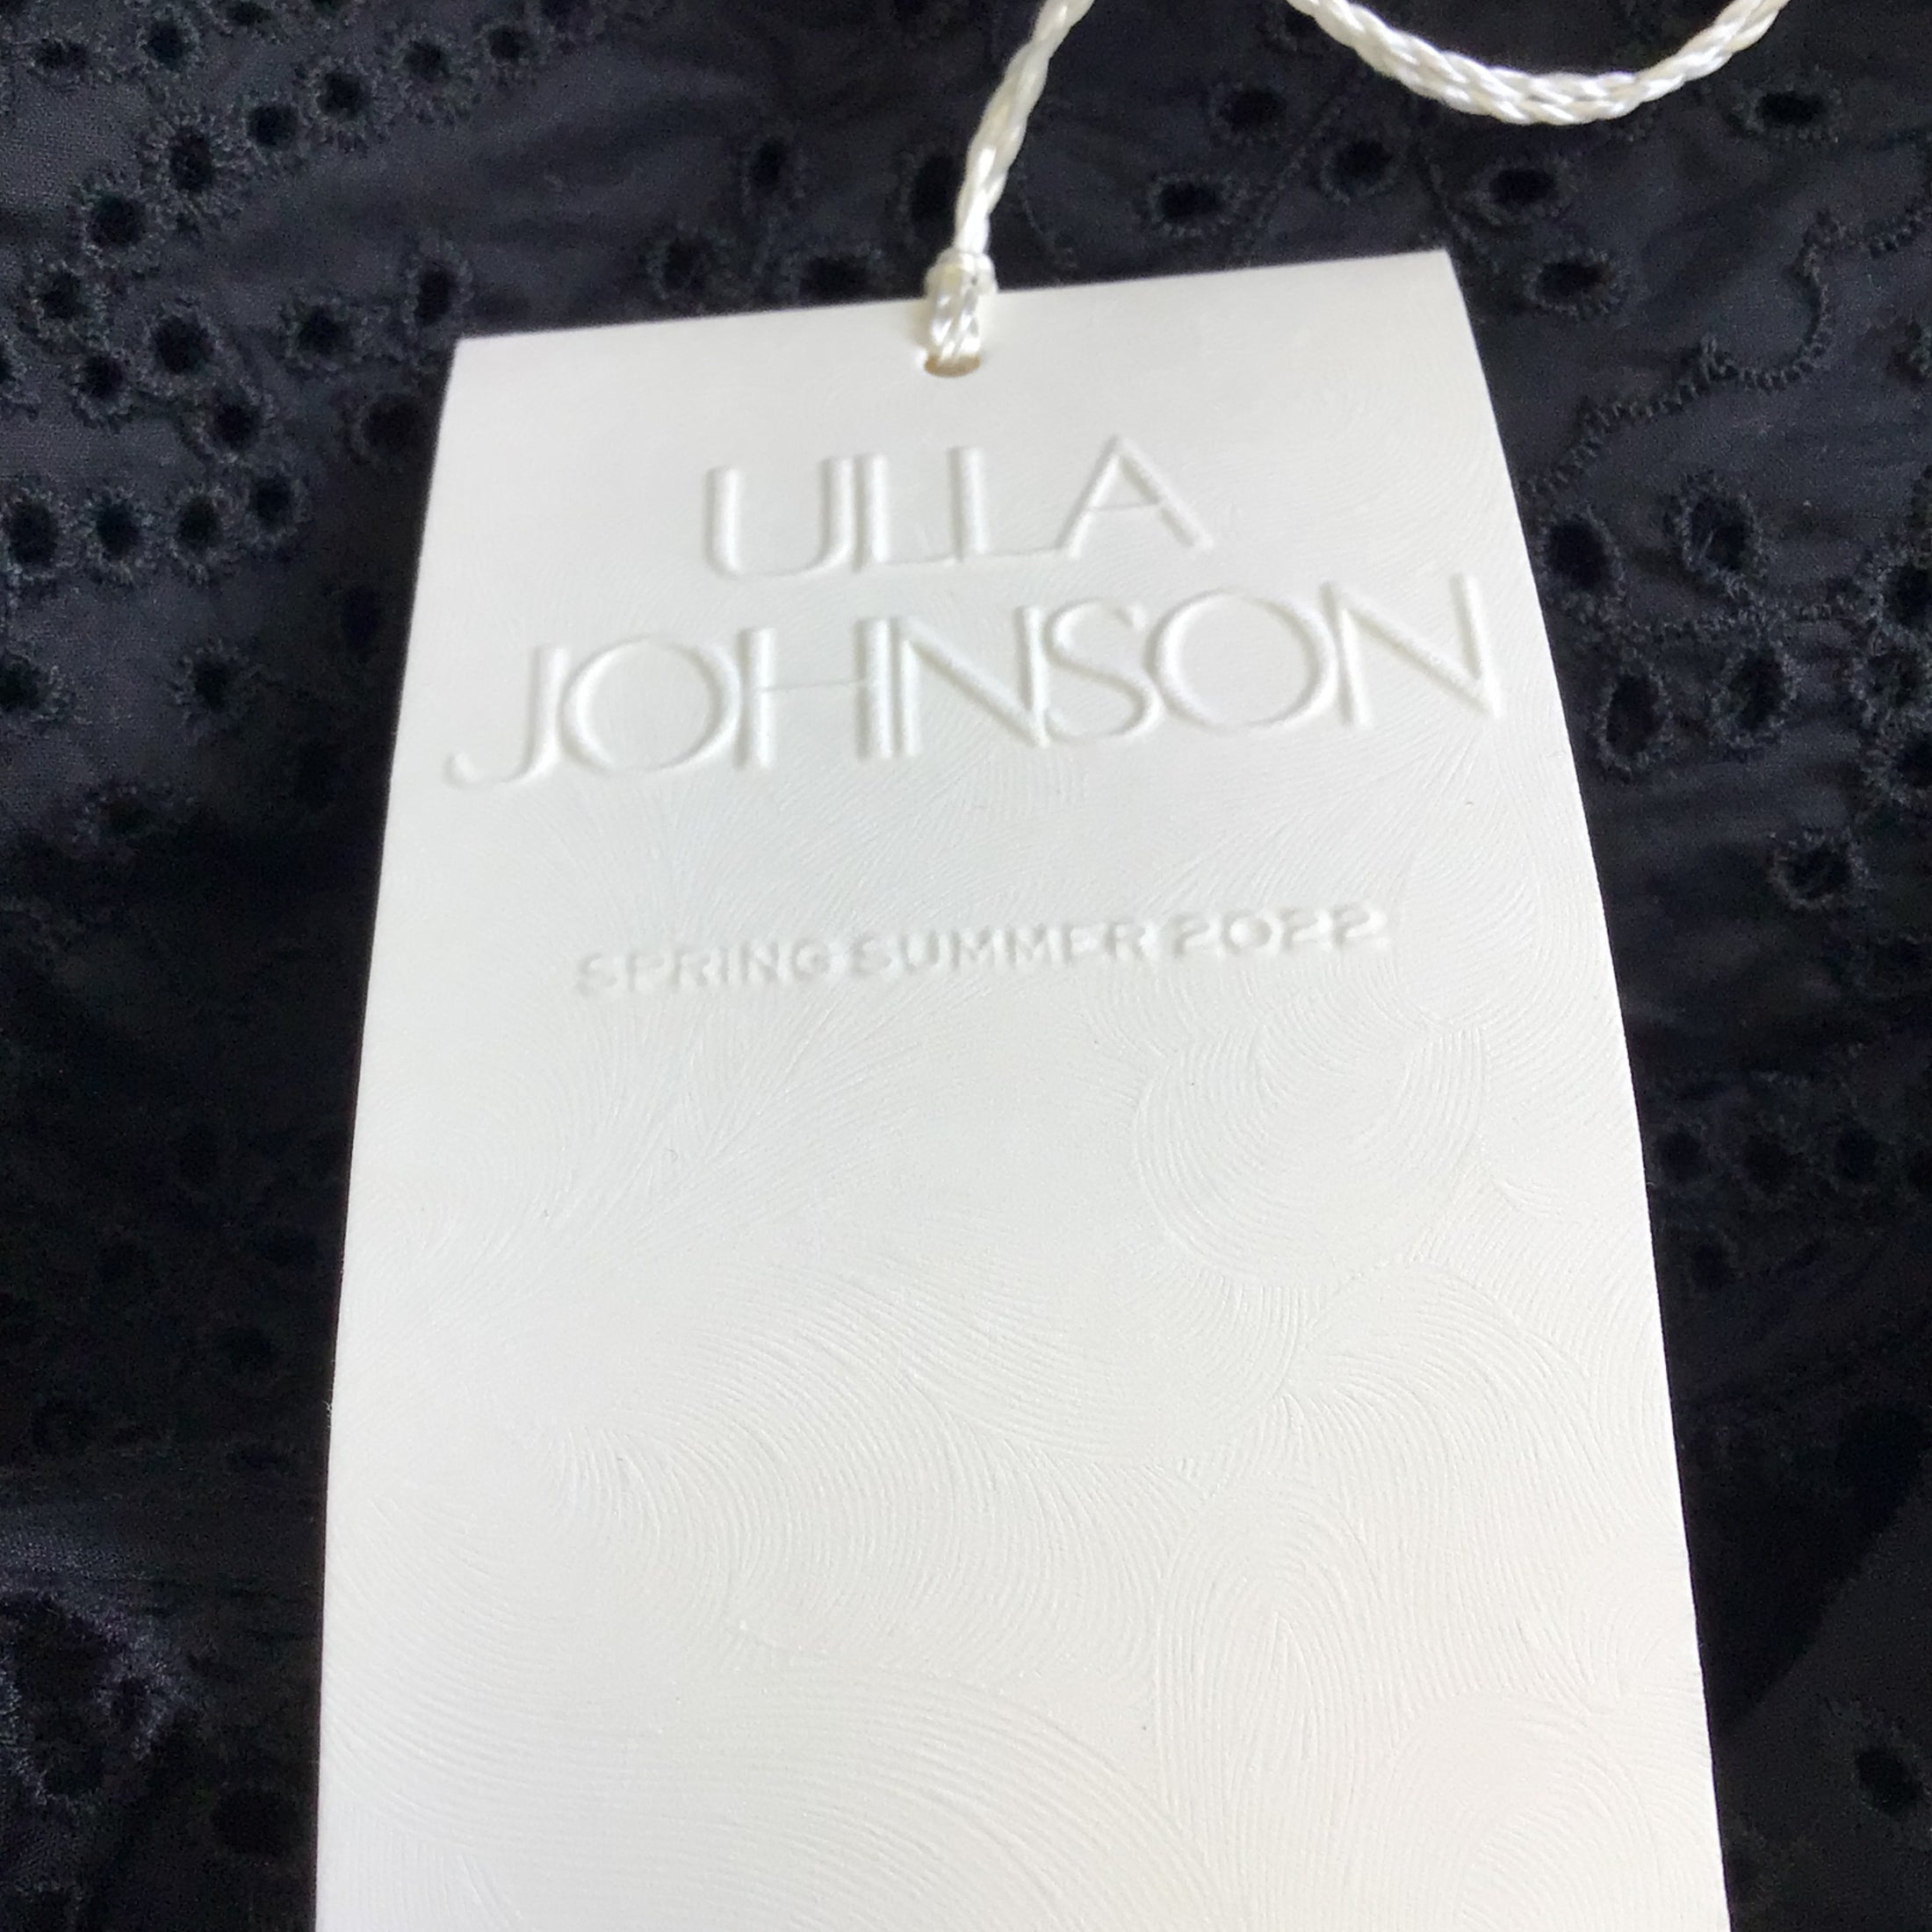 Ulla Johnson Black One-Shoulder Eyelet Julianna Blouse